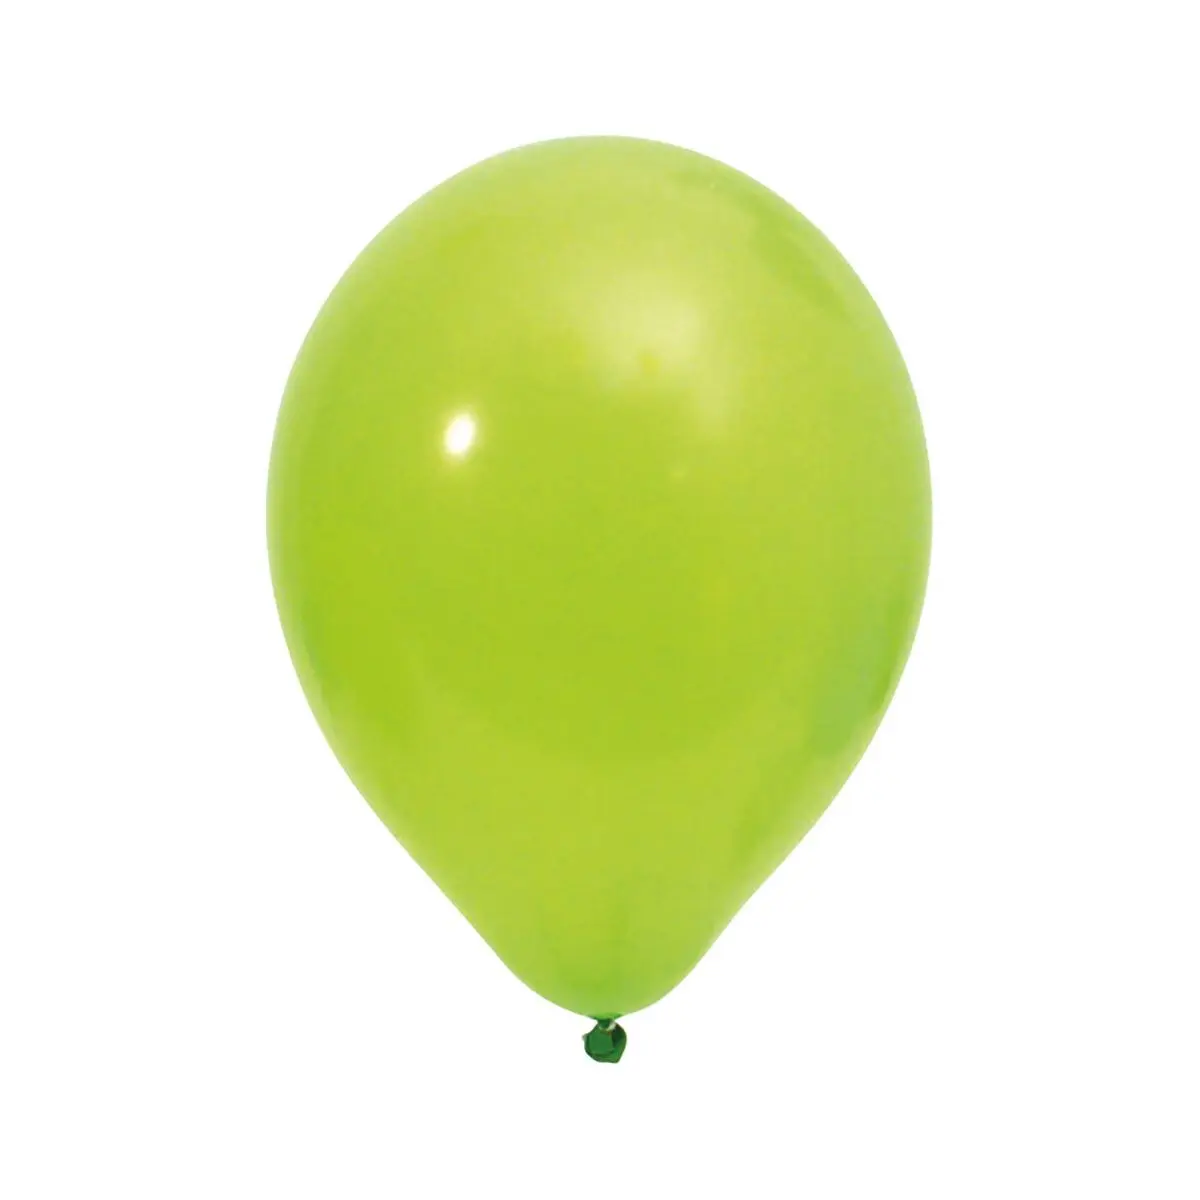 Kit de baloane cu heliu BalloonGaz 50